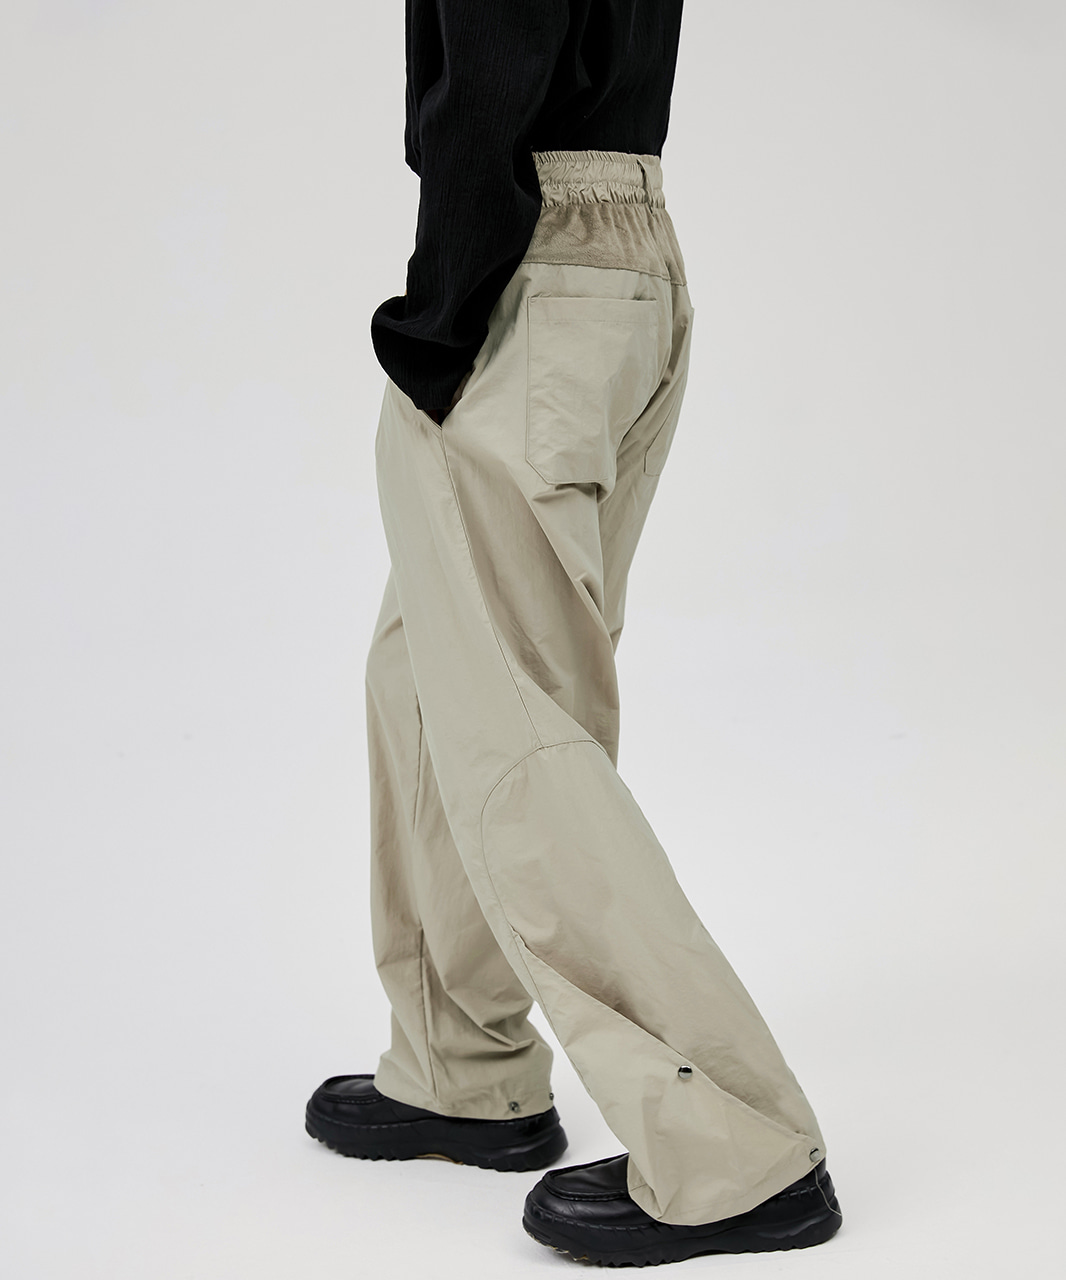 FLARE UP플레어업 Side Flap Pants - Beige (FL-219)